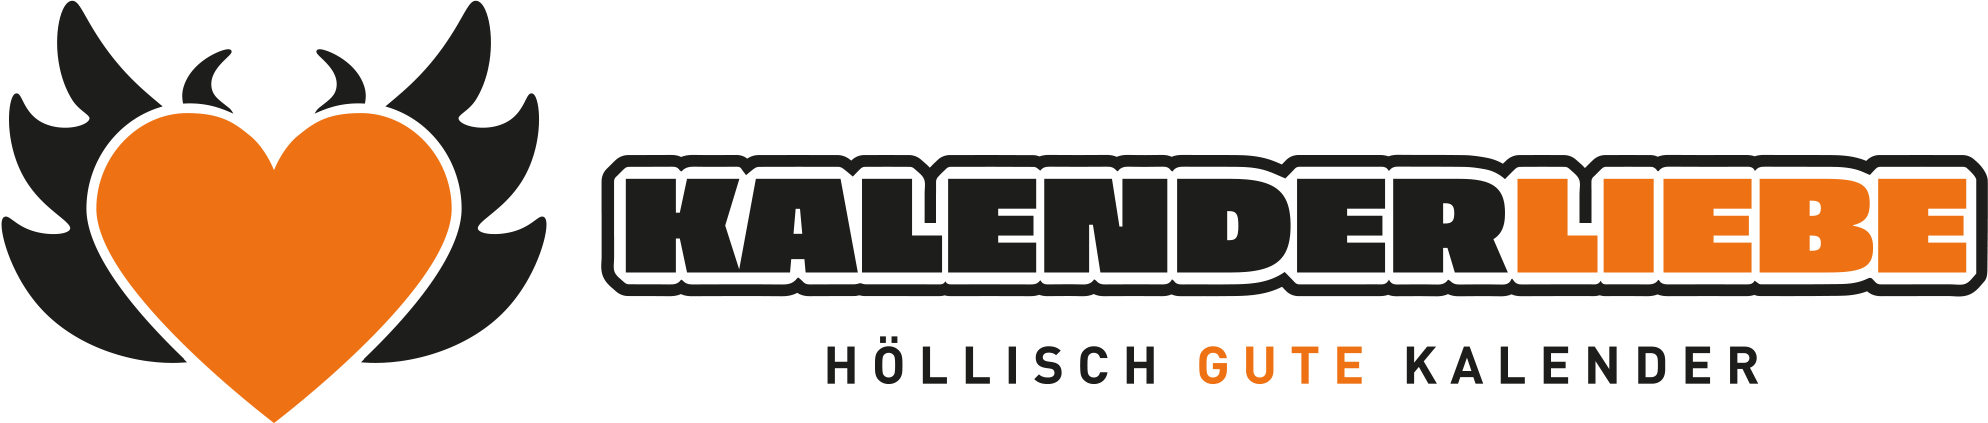 Kalenderliebe GmbH Logo